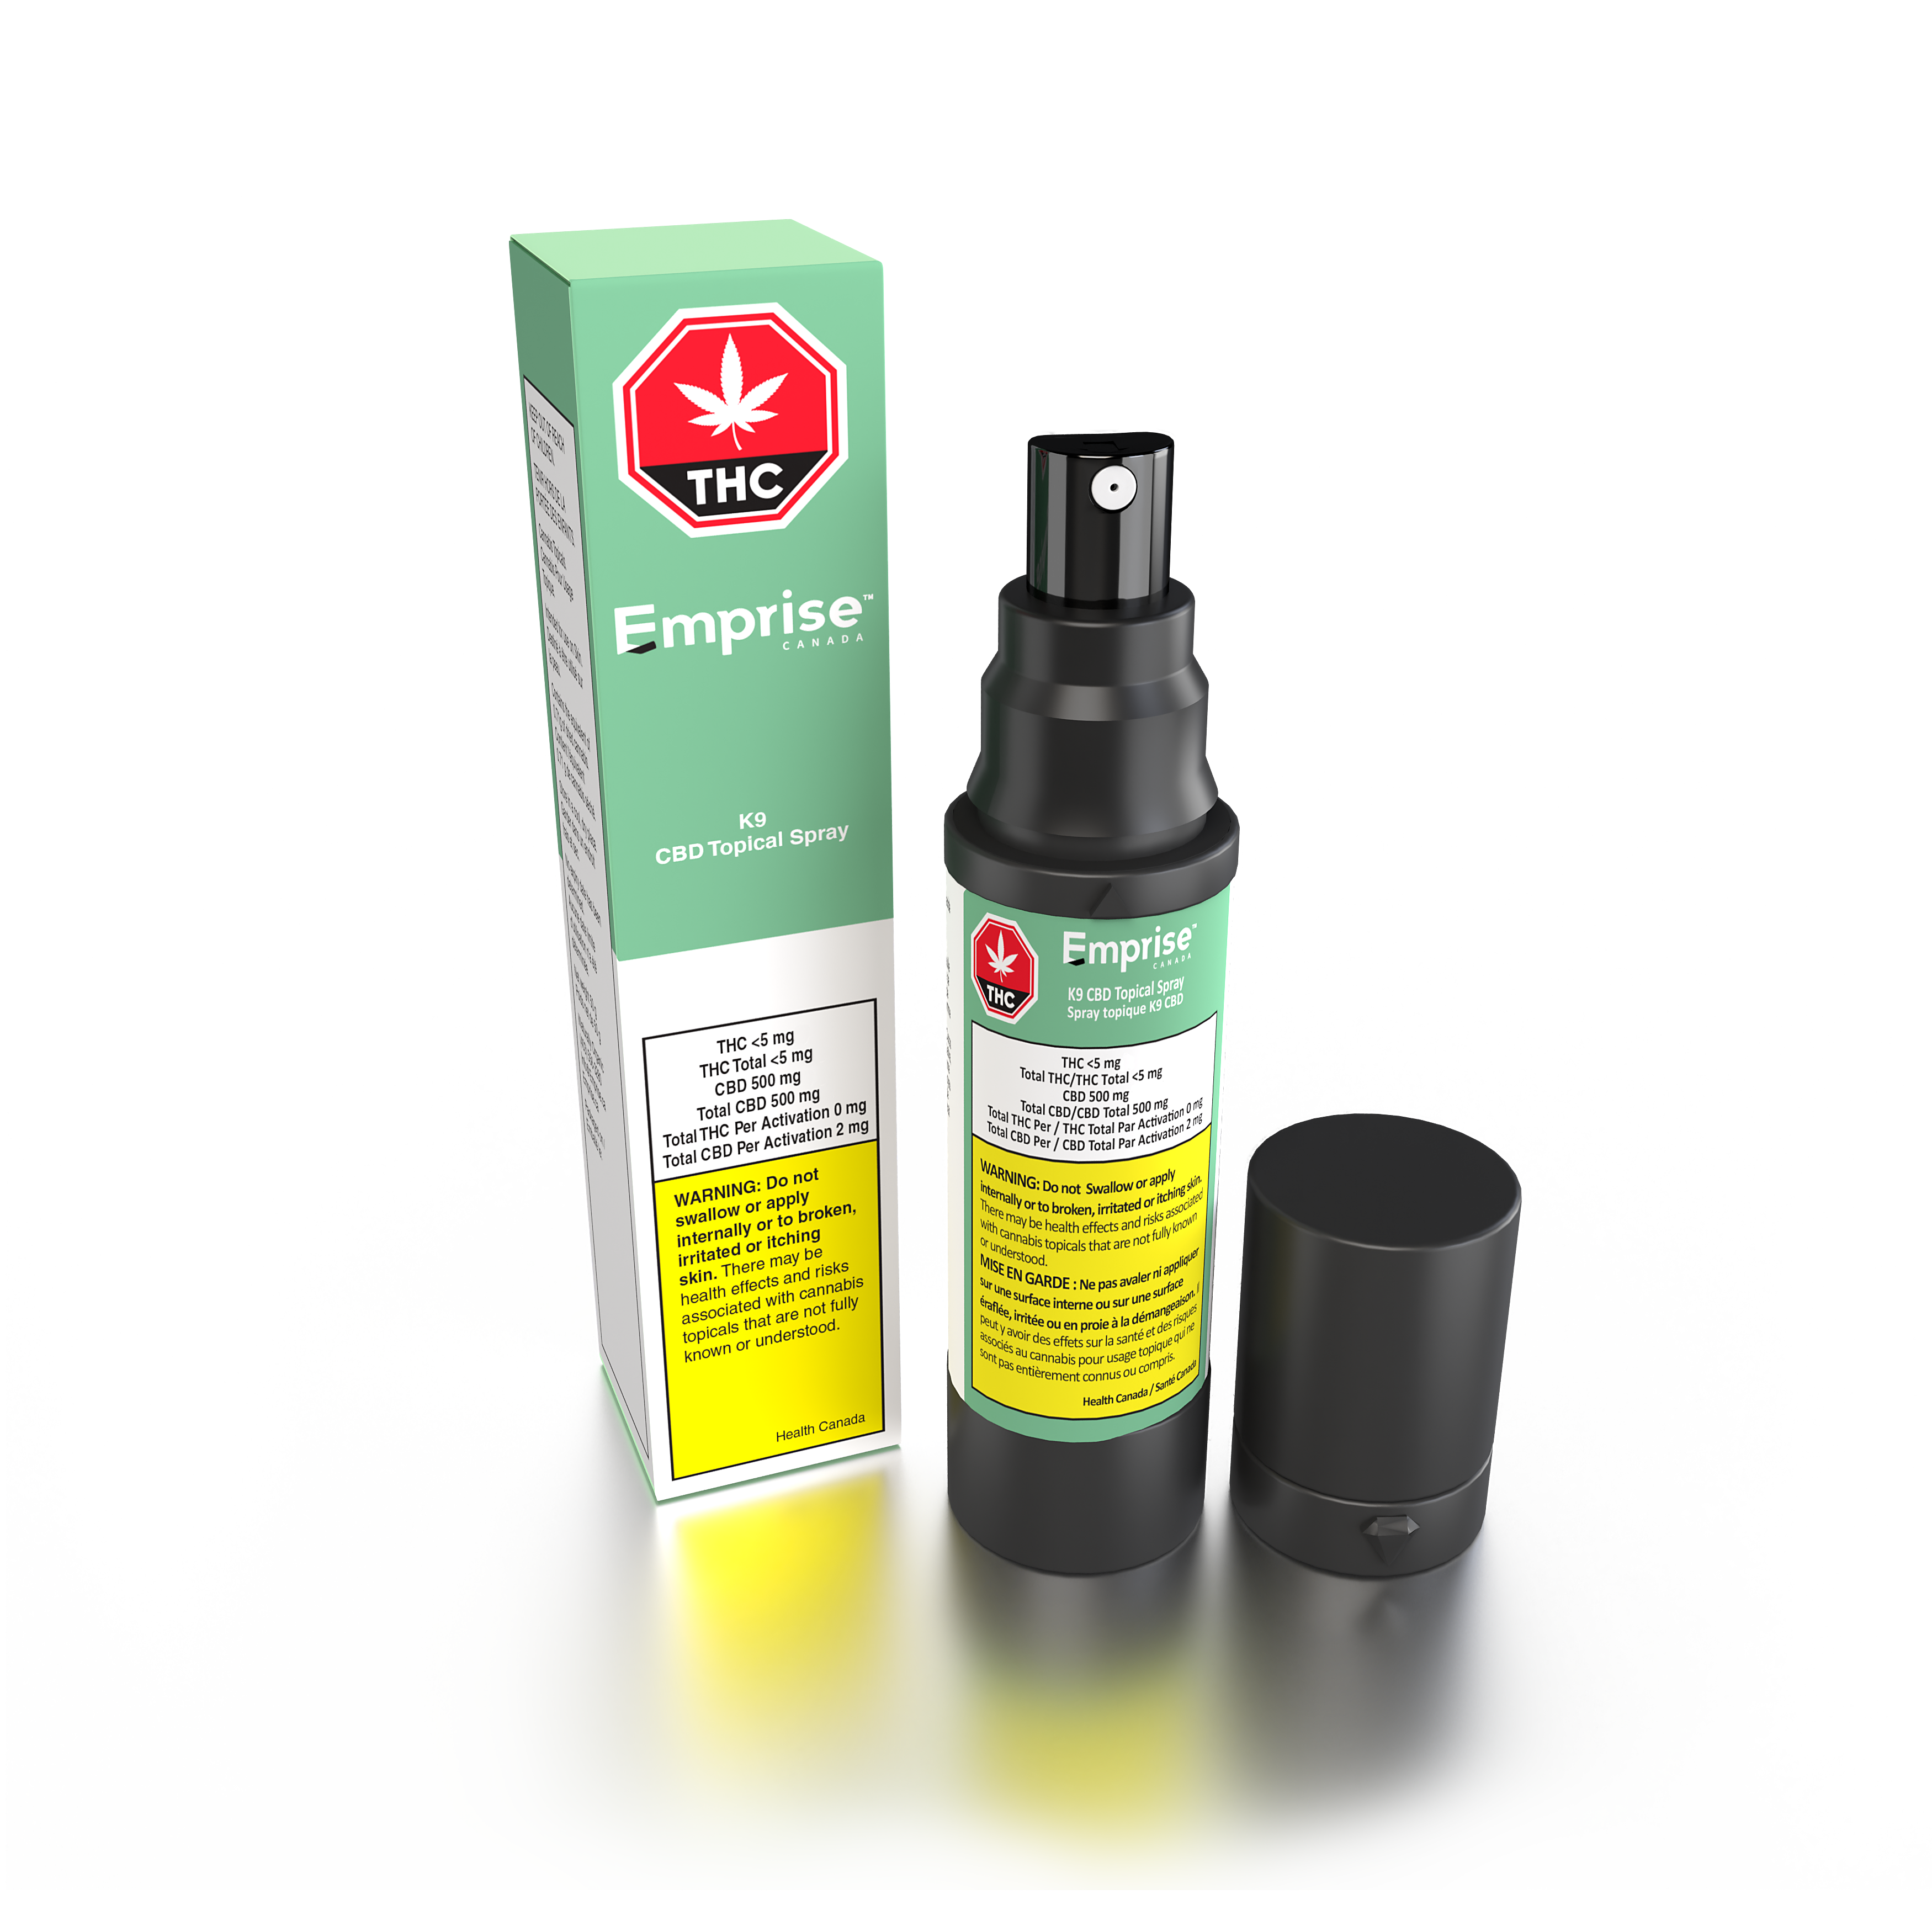 Cannabis Product K9 CBD Topical Spray Rapid Absorption Transdermal Nano 500mg CBD by Emprise Canada